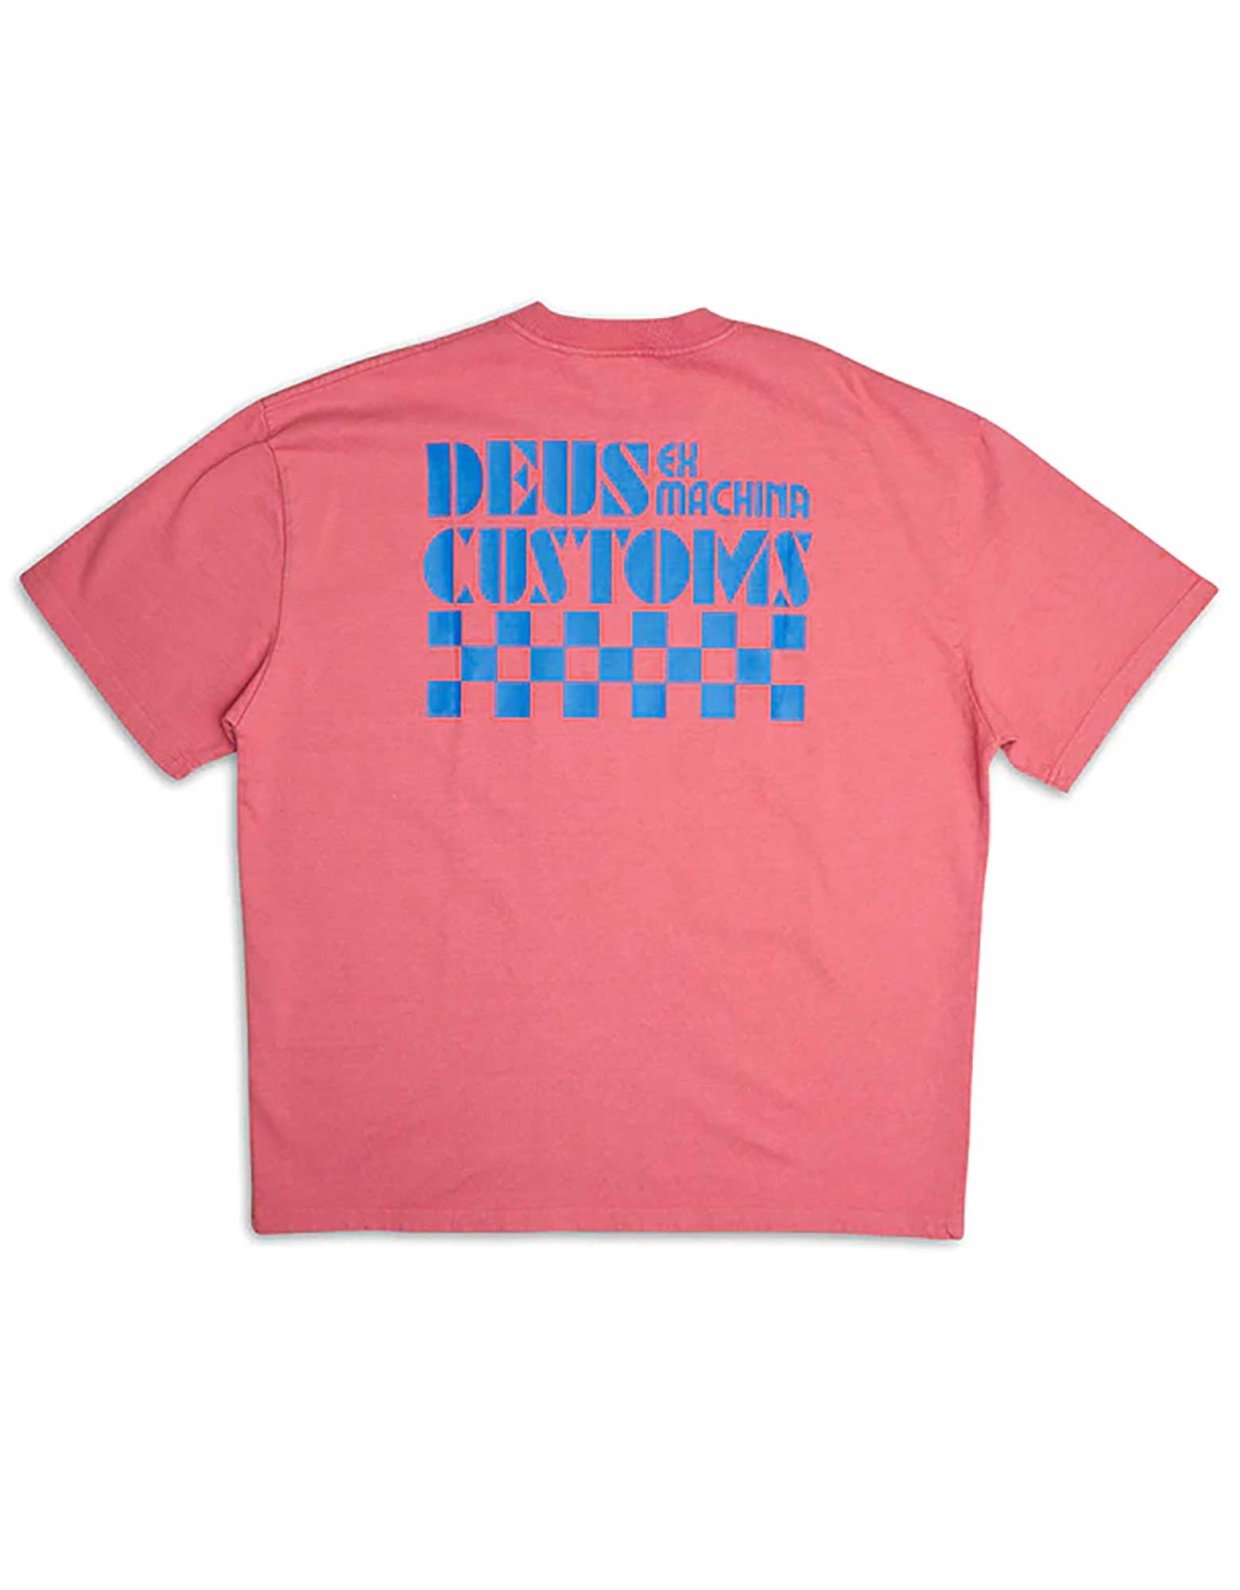 Deus Ex Machina Trip tee t-shirt raspberry